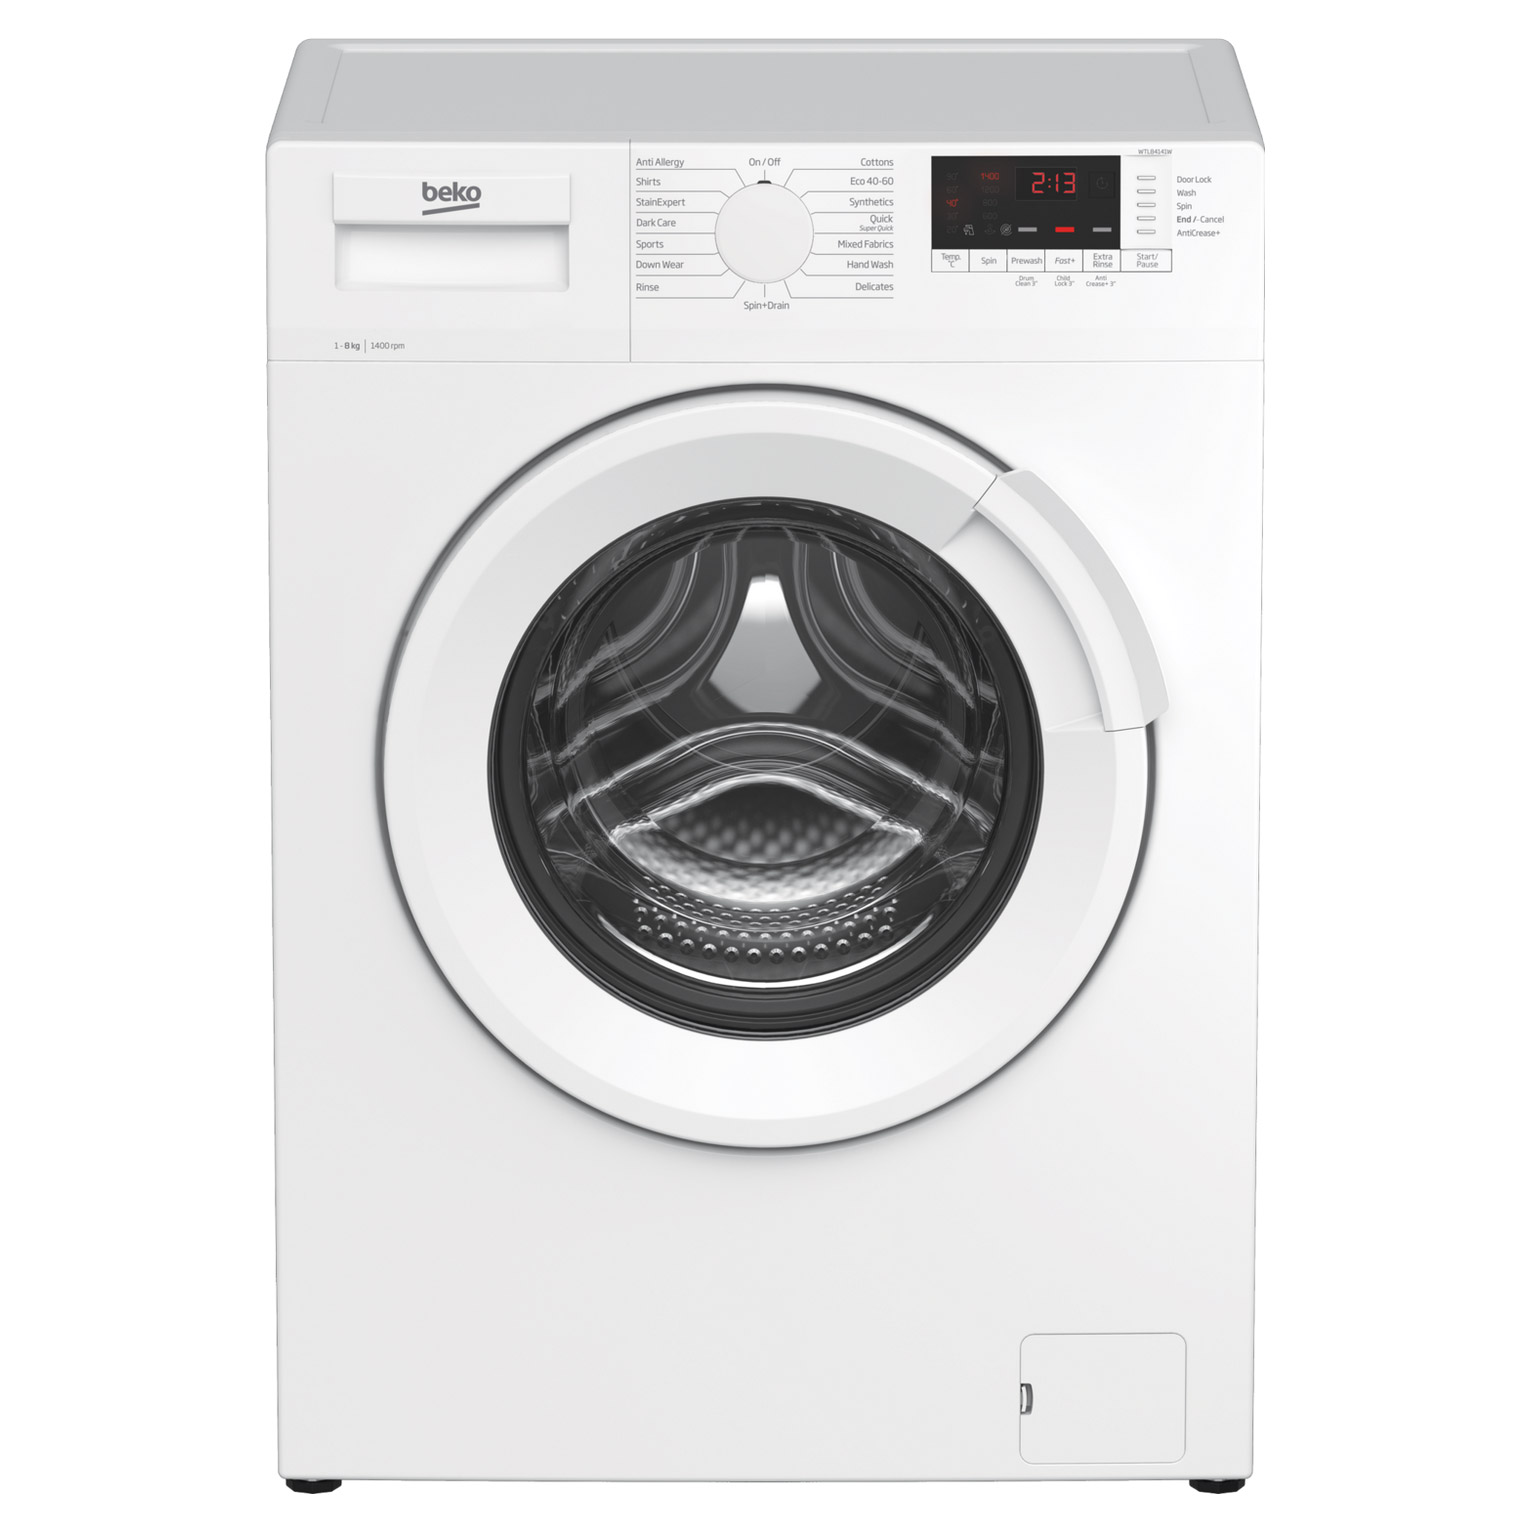 Beko WTL84141W Washing Machine in White 1400rpm 8Kg C Rated